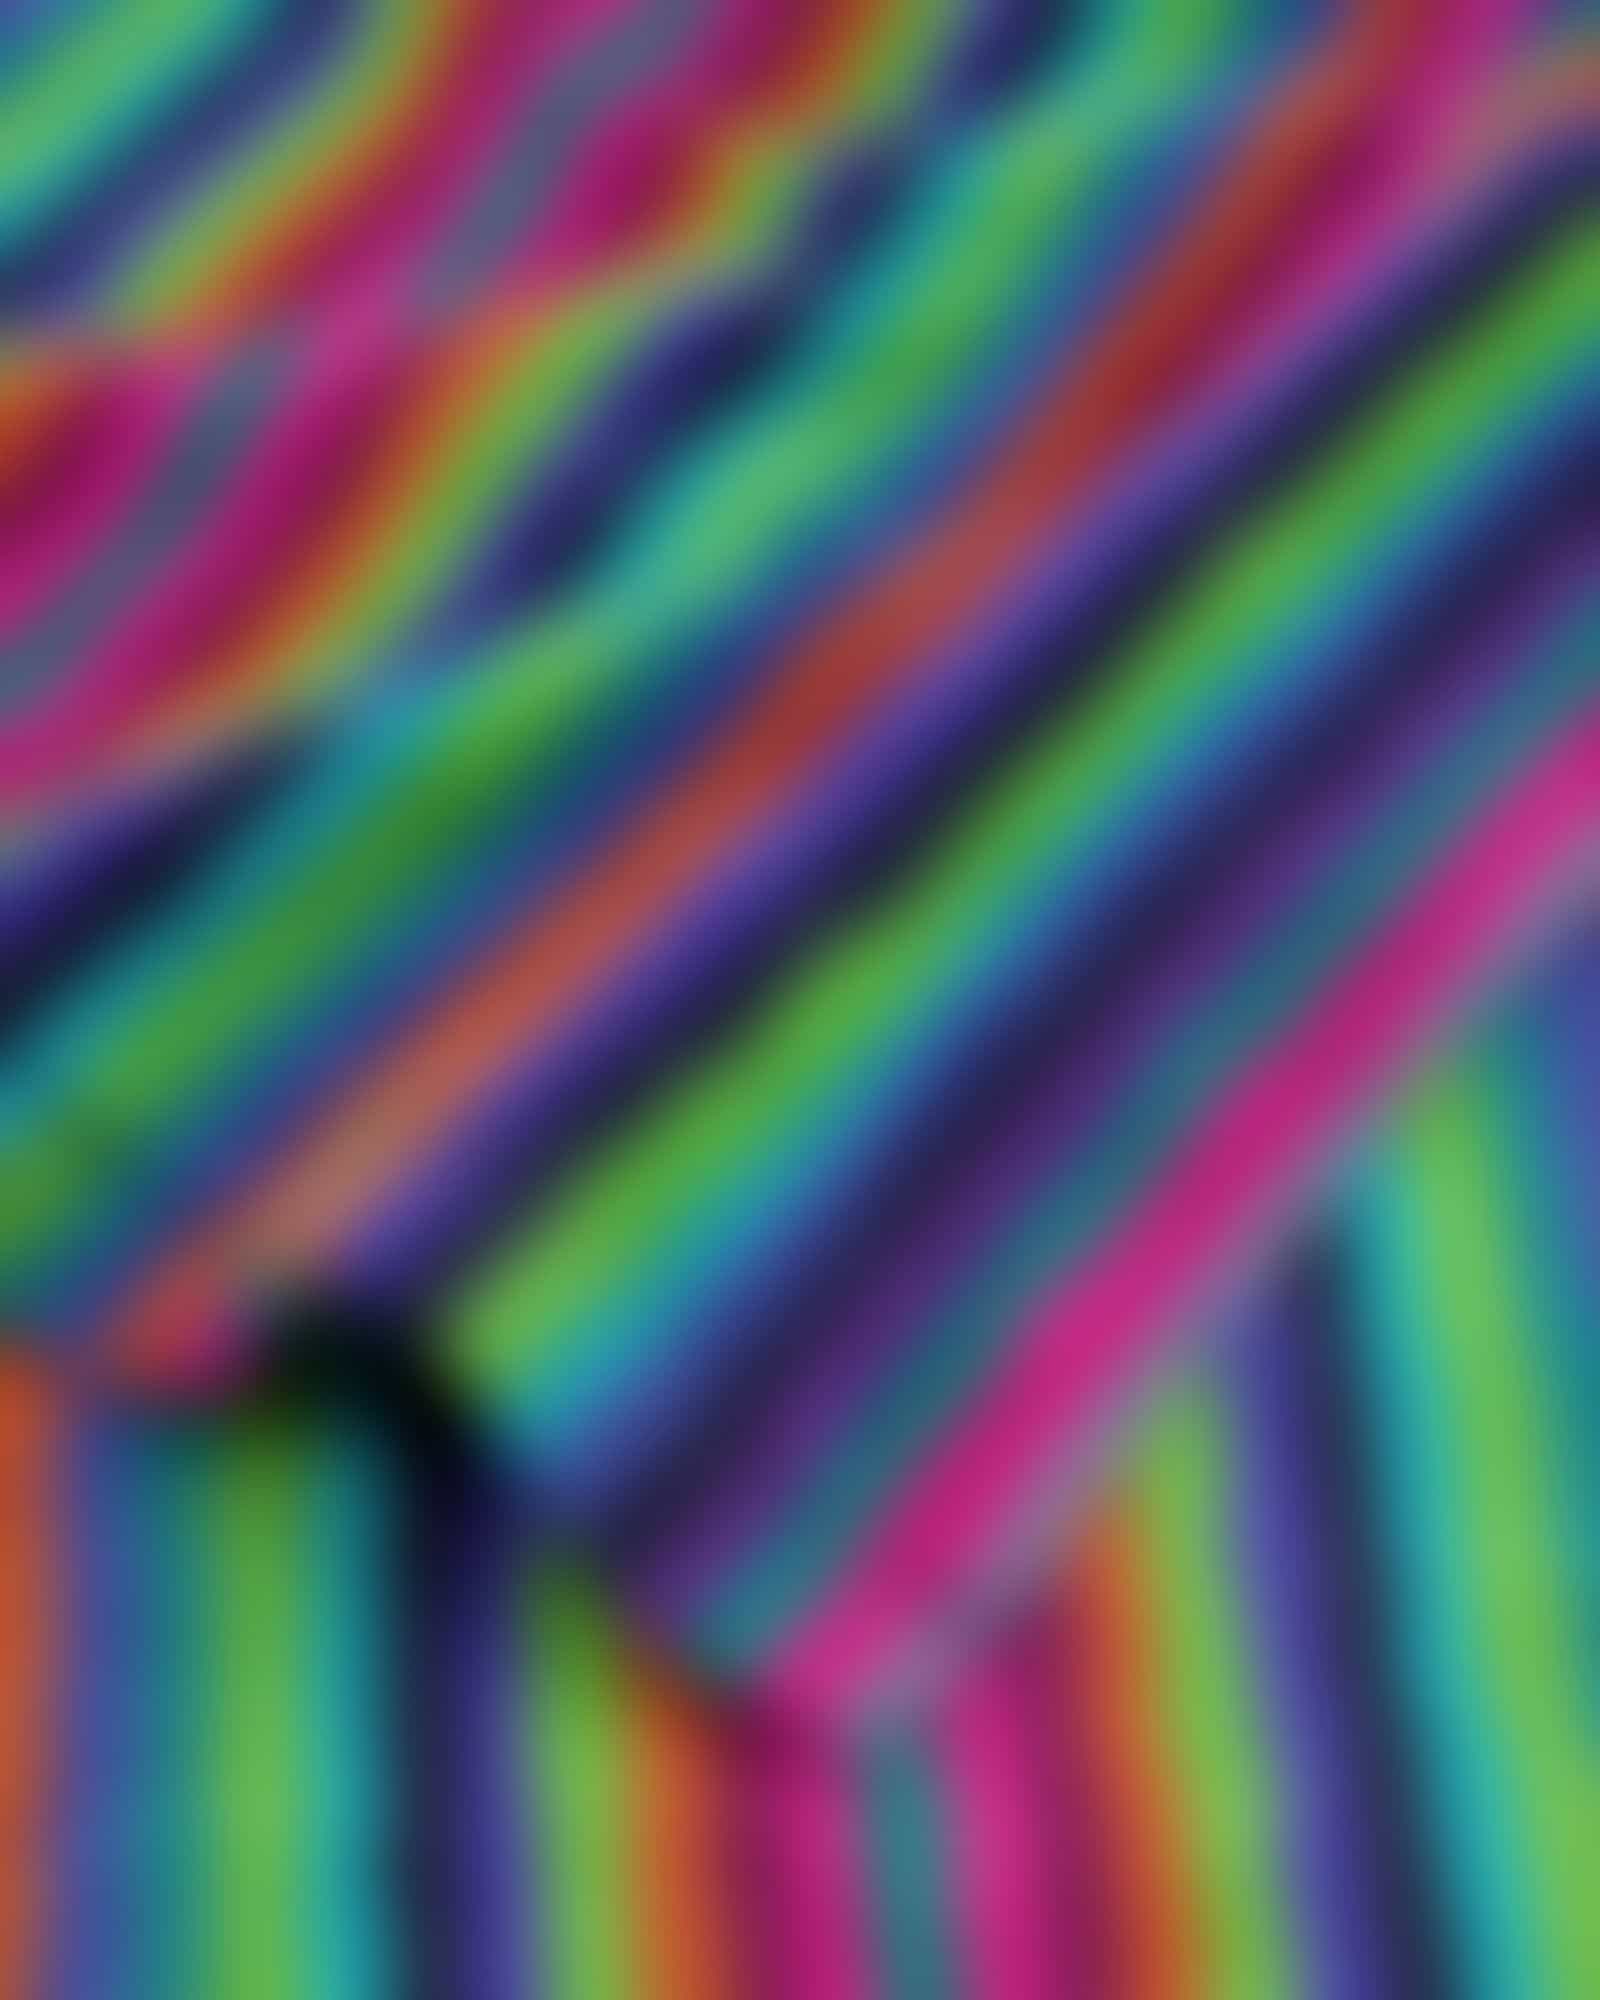 Cawö - Life Style Streifen 7048 - Farbe: 84 - multicolor - Handtuch 50x100 cm